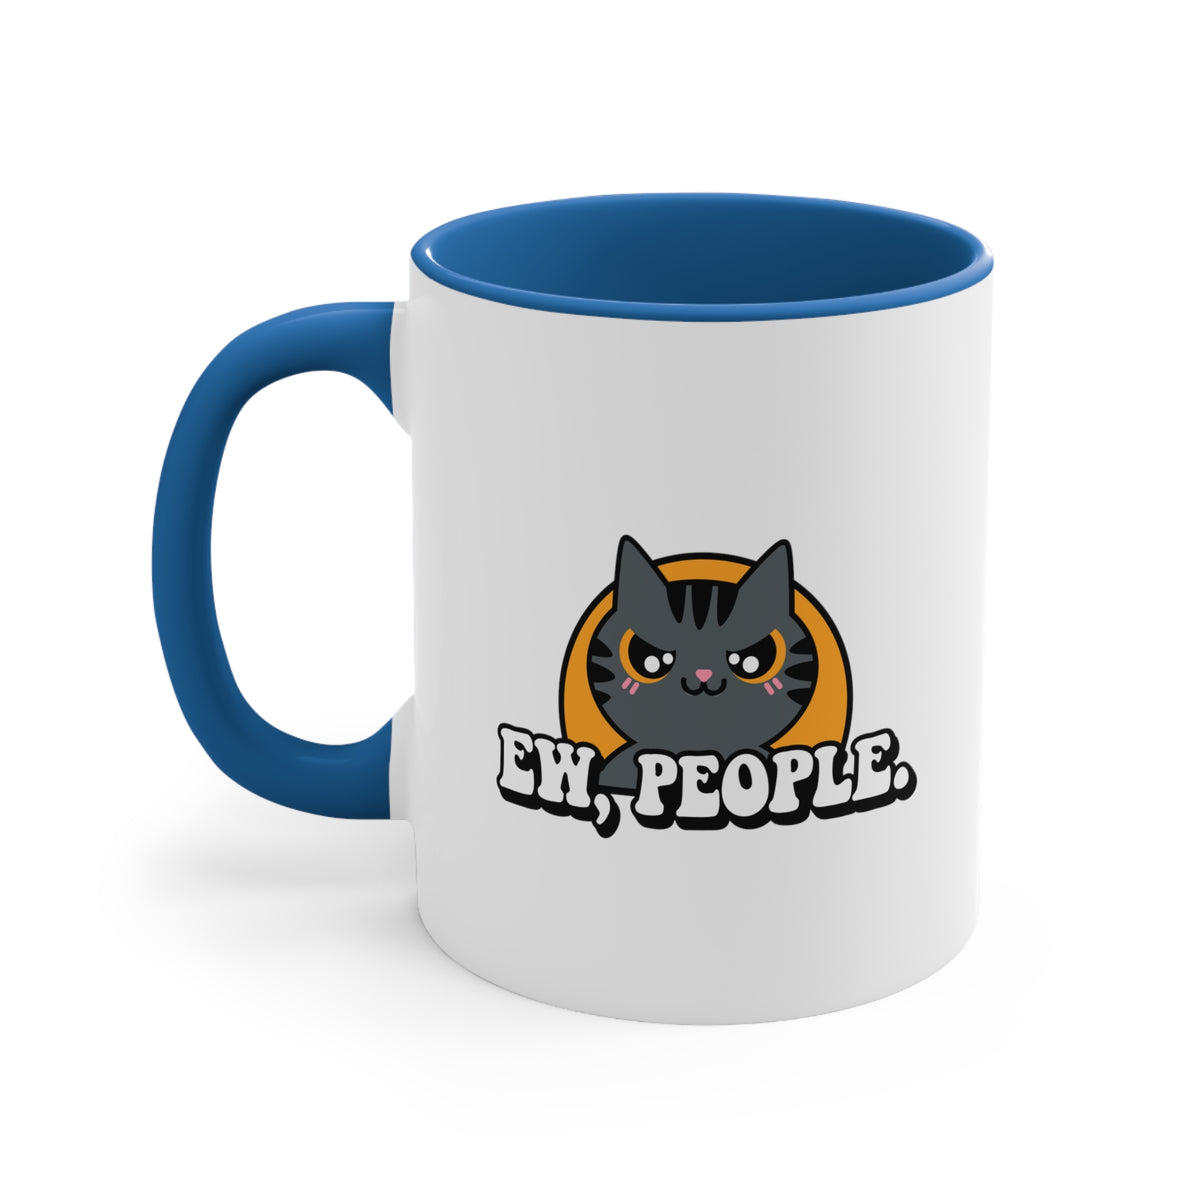 Ew People Accent Coffee Mug, 11oz